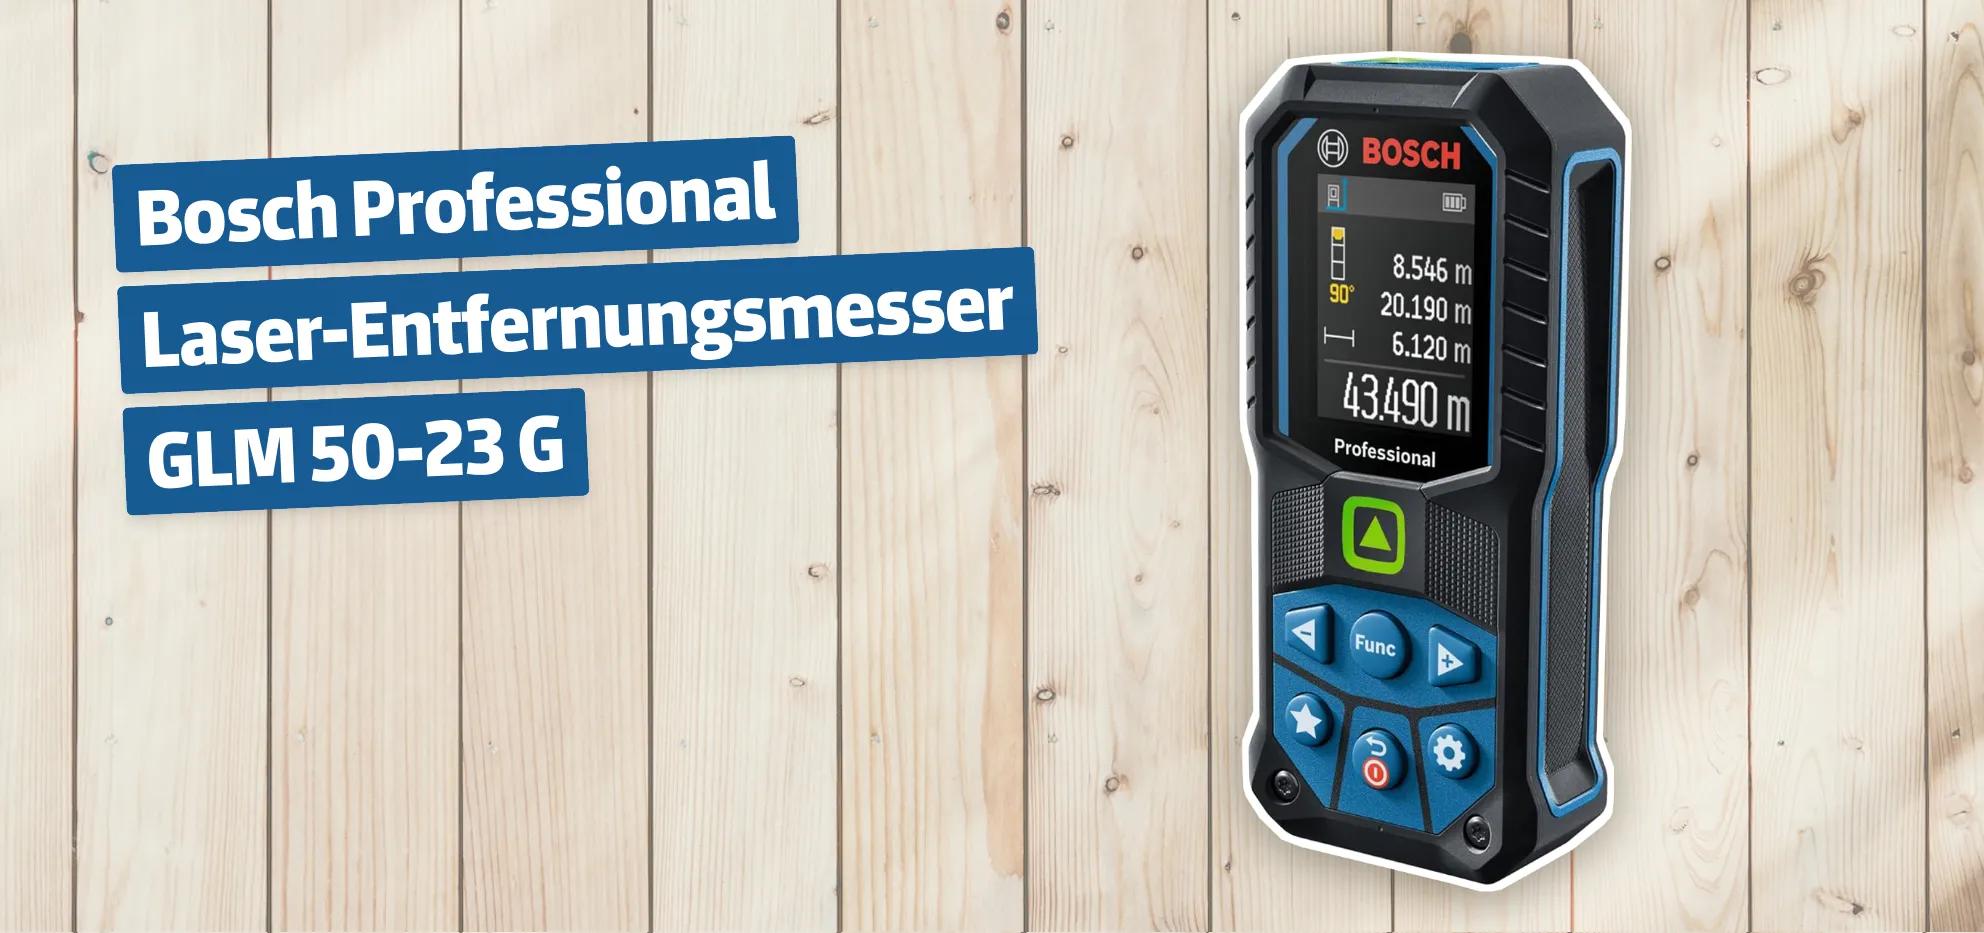 Bosch Professional Laser-Entfernungsmesser GLM 50-23 G